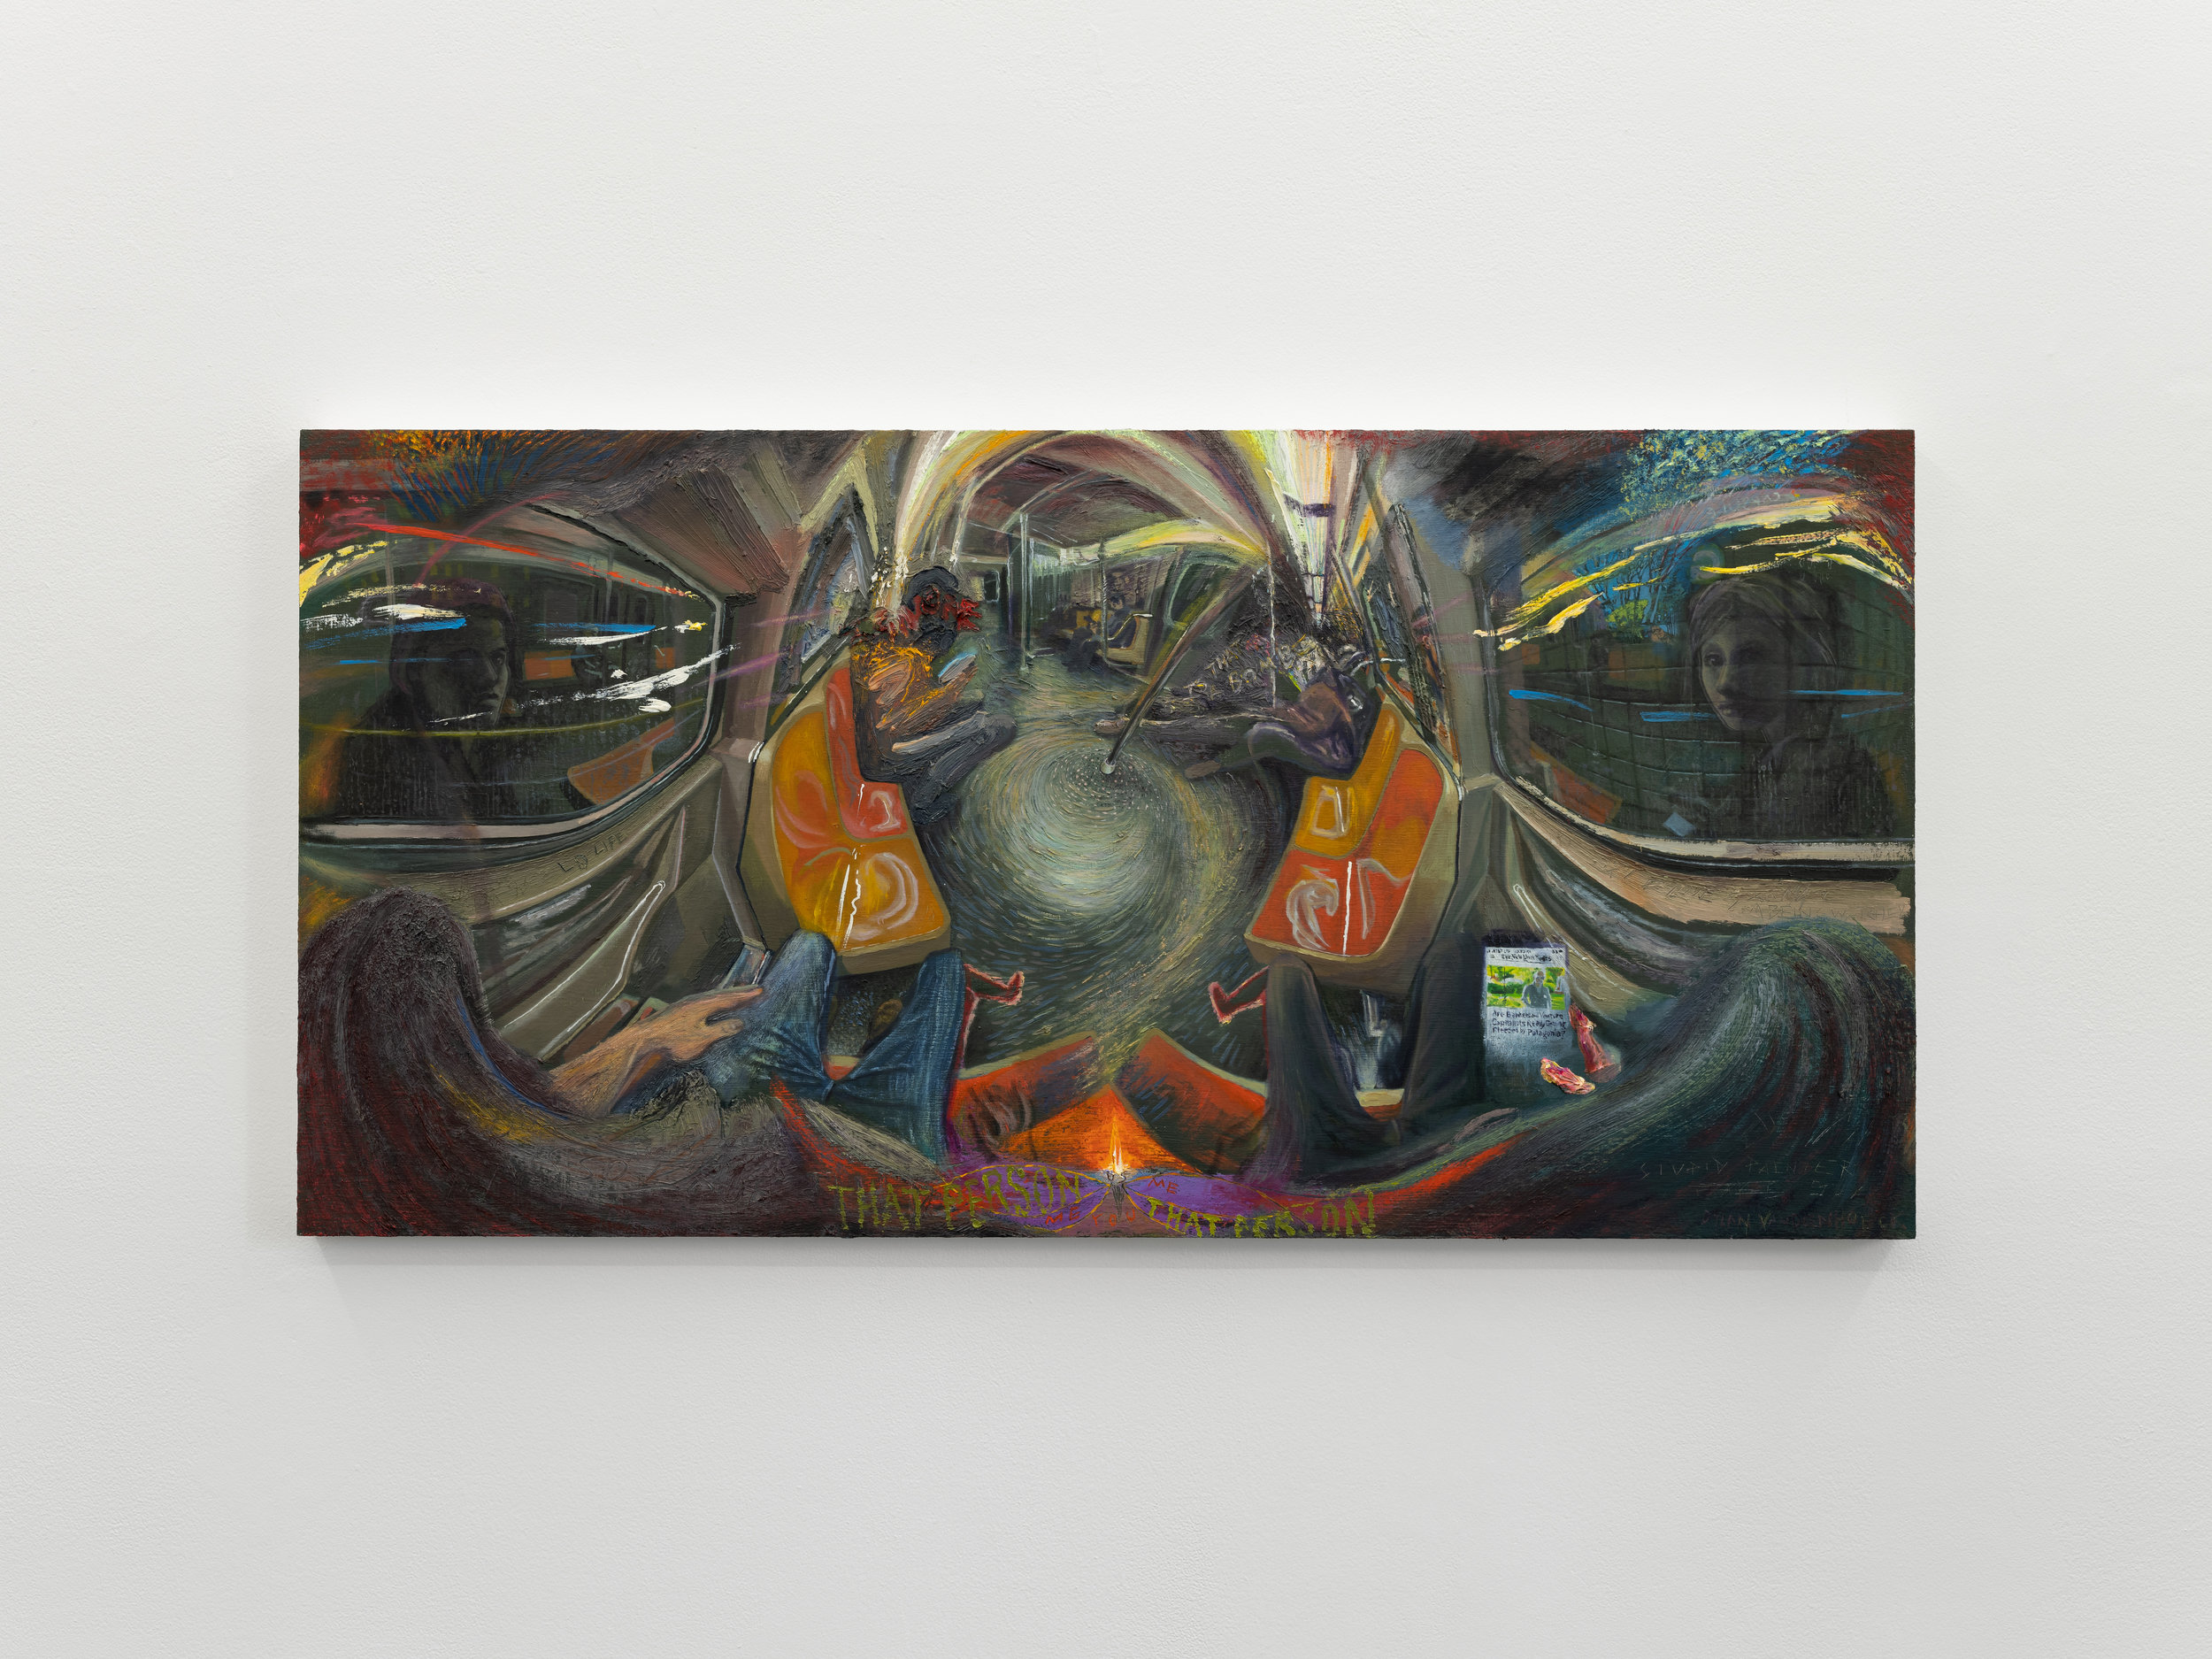  Dylan Vandenhoeck,  Subway,  2019, Oil on wooden panel 